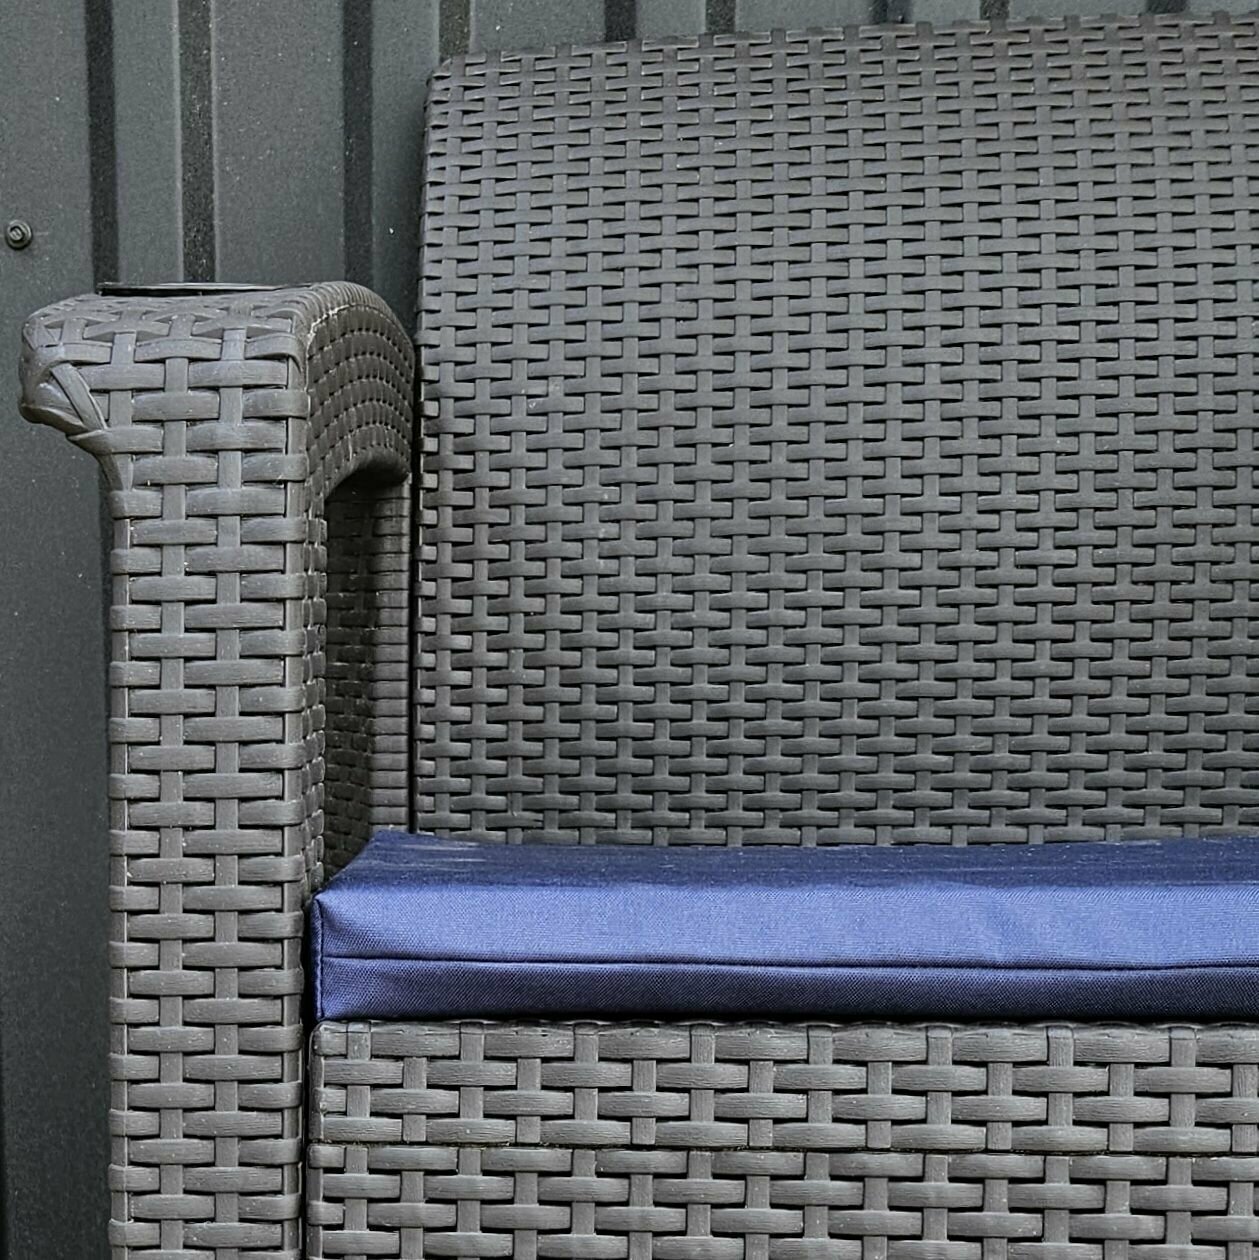 Комплект подушек для углового дивана Альтернатива (набор из трех подушек темно-синего цвета)